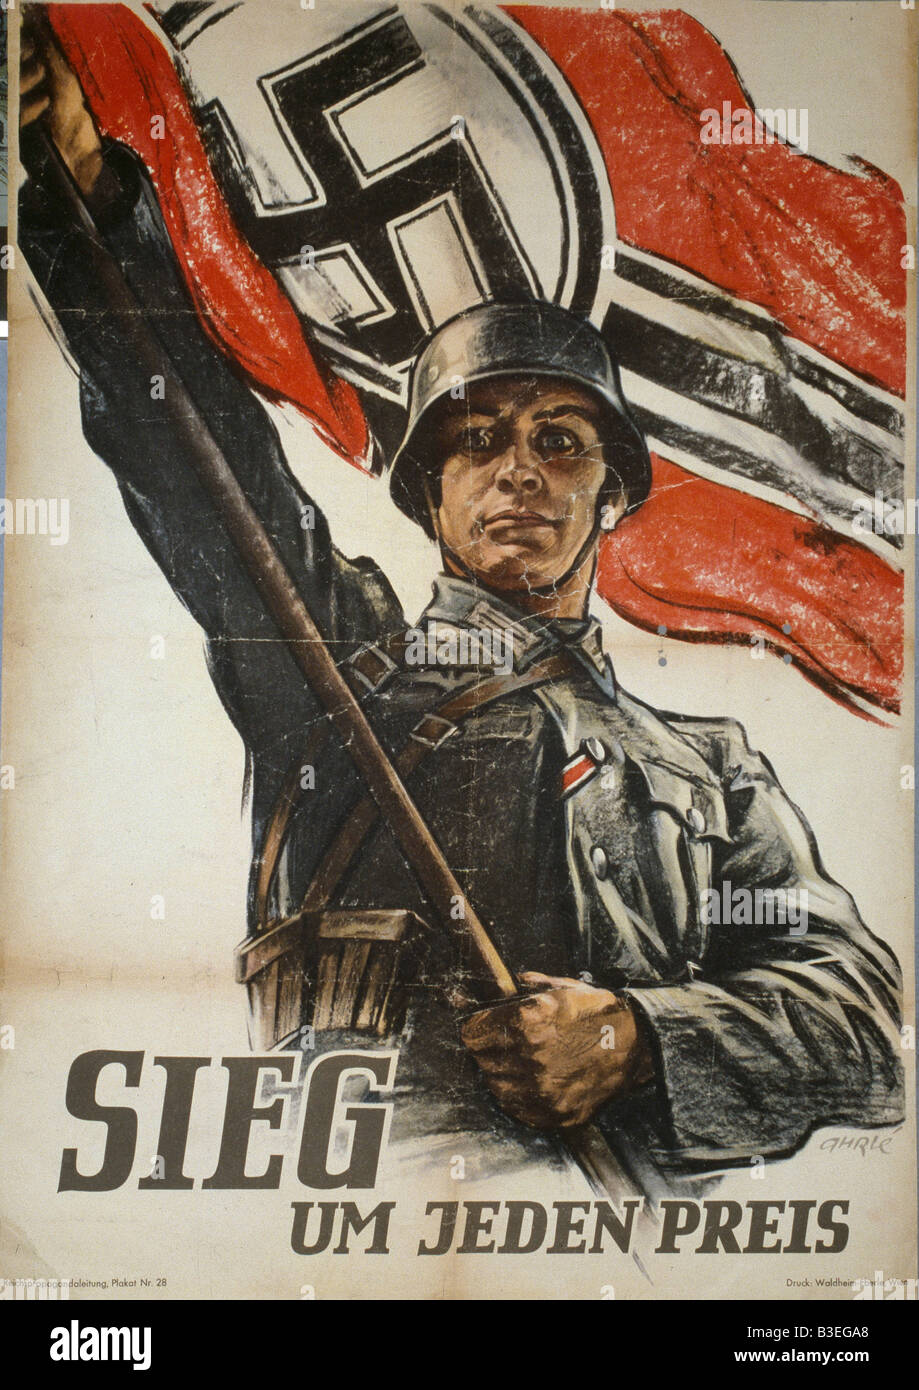 Second World War/Germany/Propaganda. Stock Photo